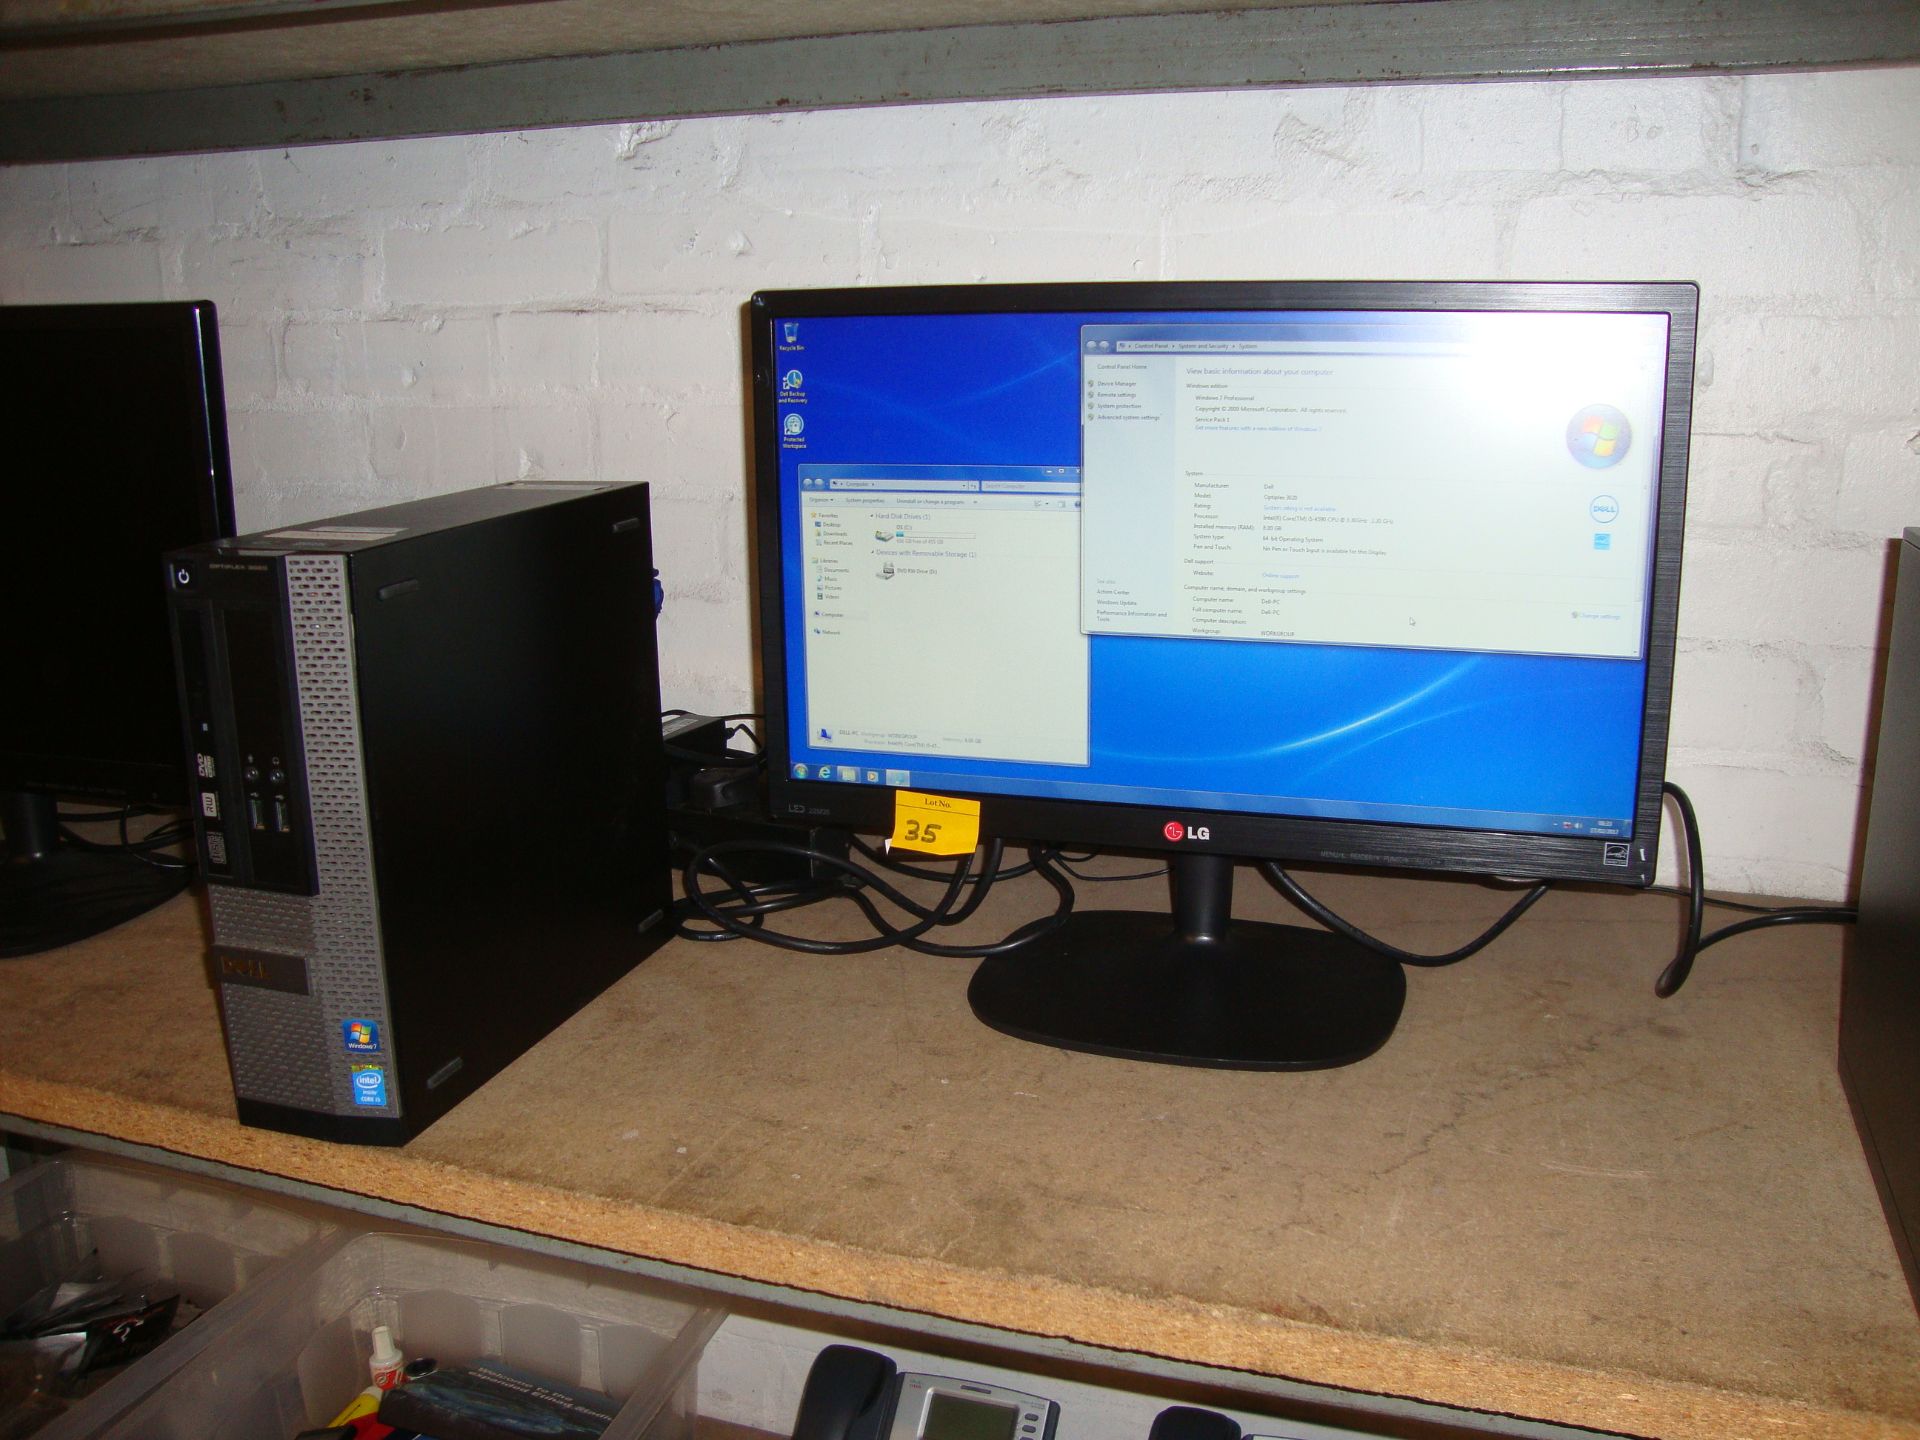 Dell Optiplex 3020 computer with Core i5-4590 processor, 8Gb RAM, 500Gb hard drive + LG 22" Monitor